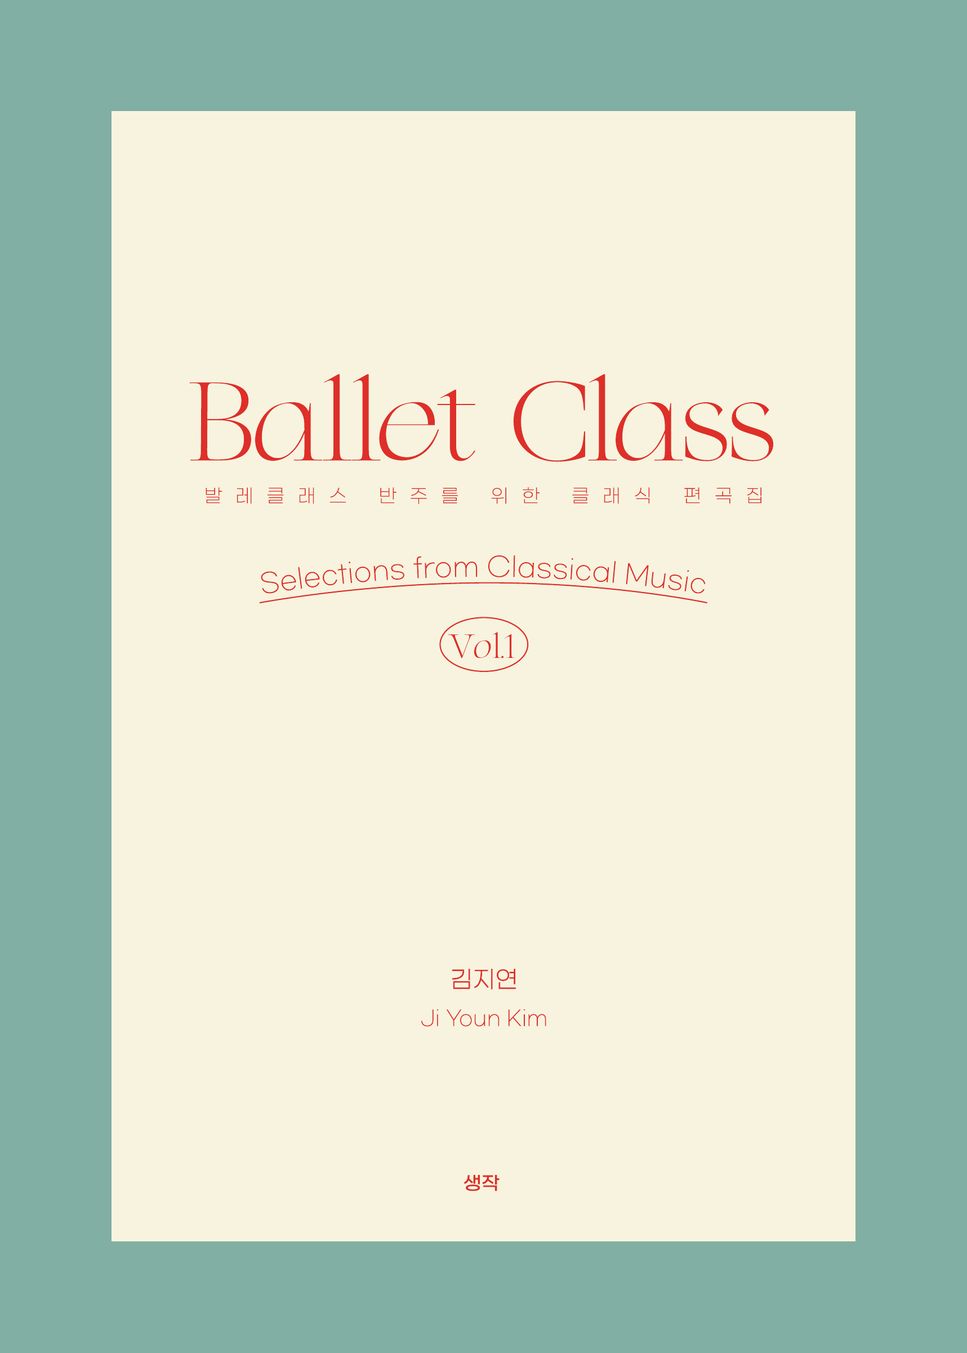 Ji Youn Kim - Ballet Class vol. 1 - 24. Petit allegro 3